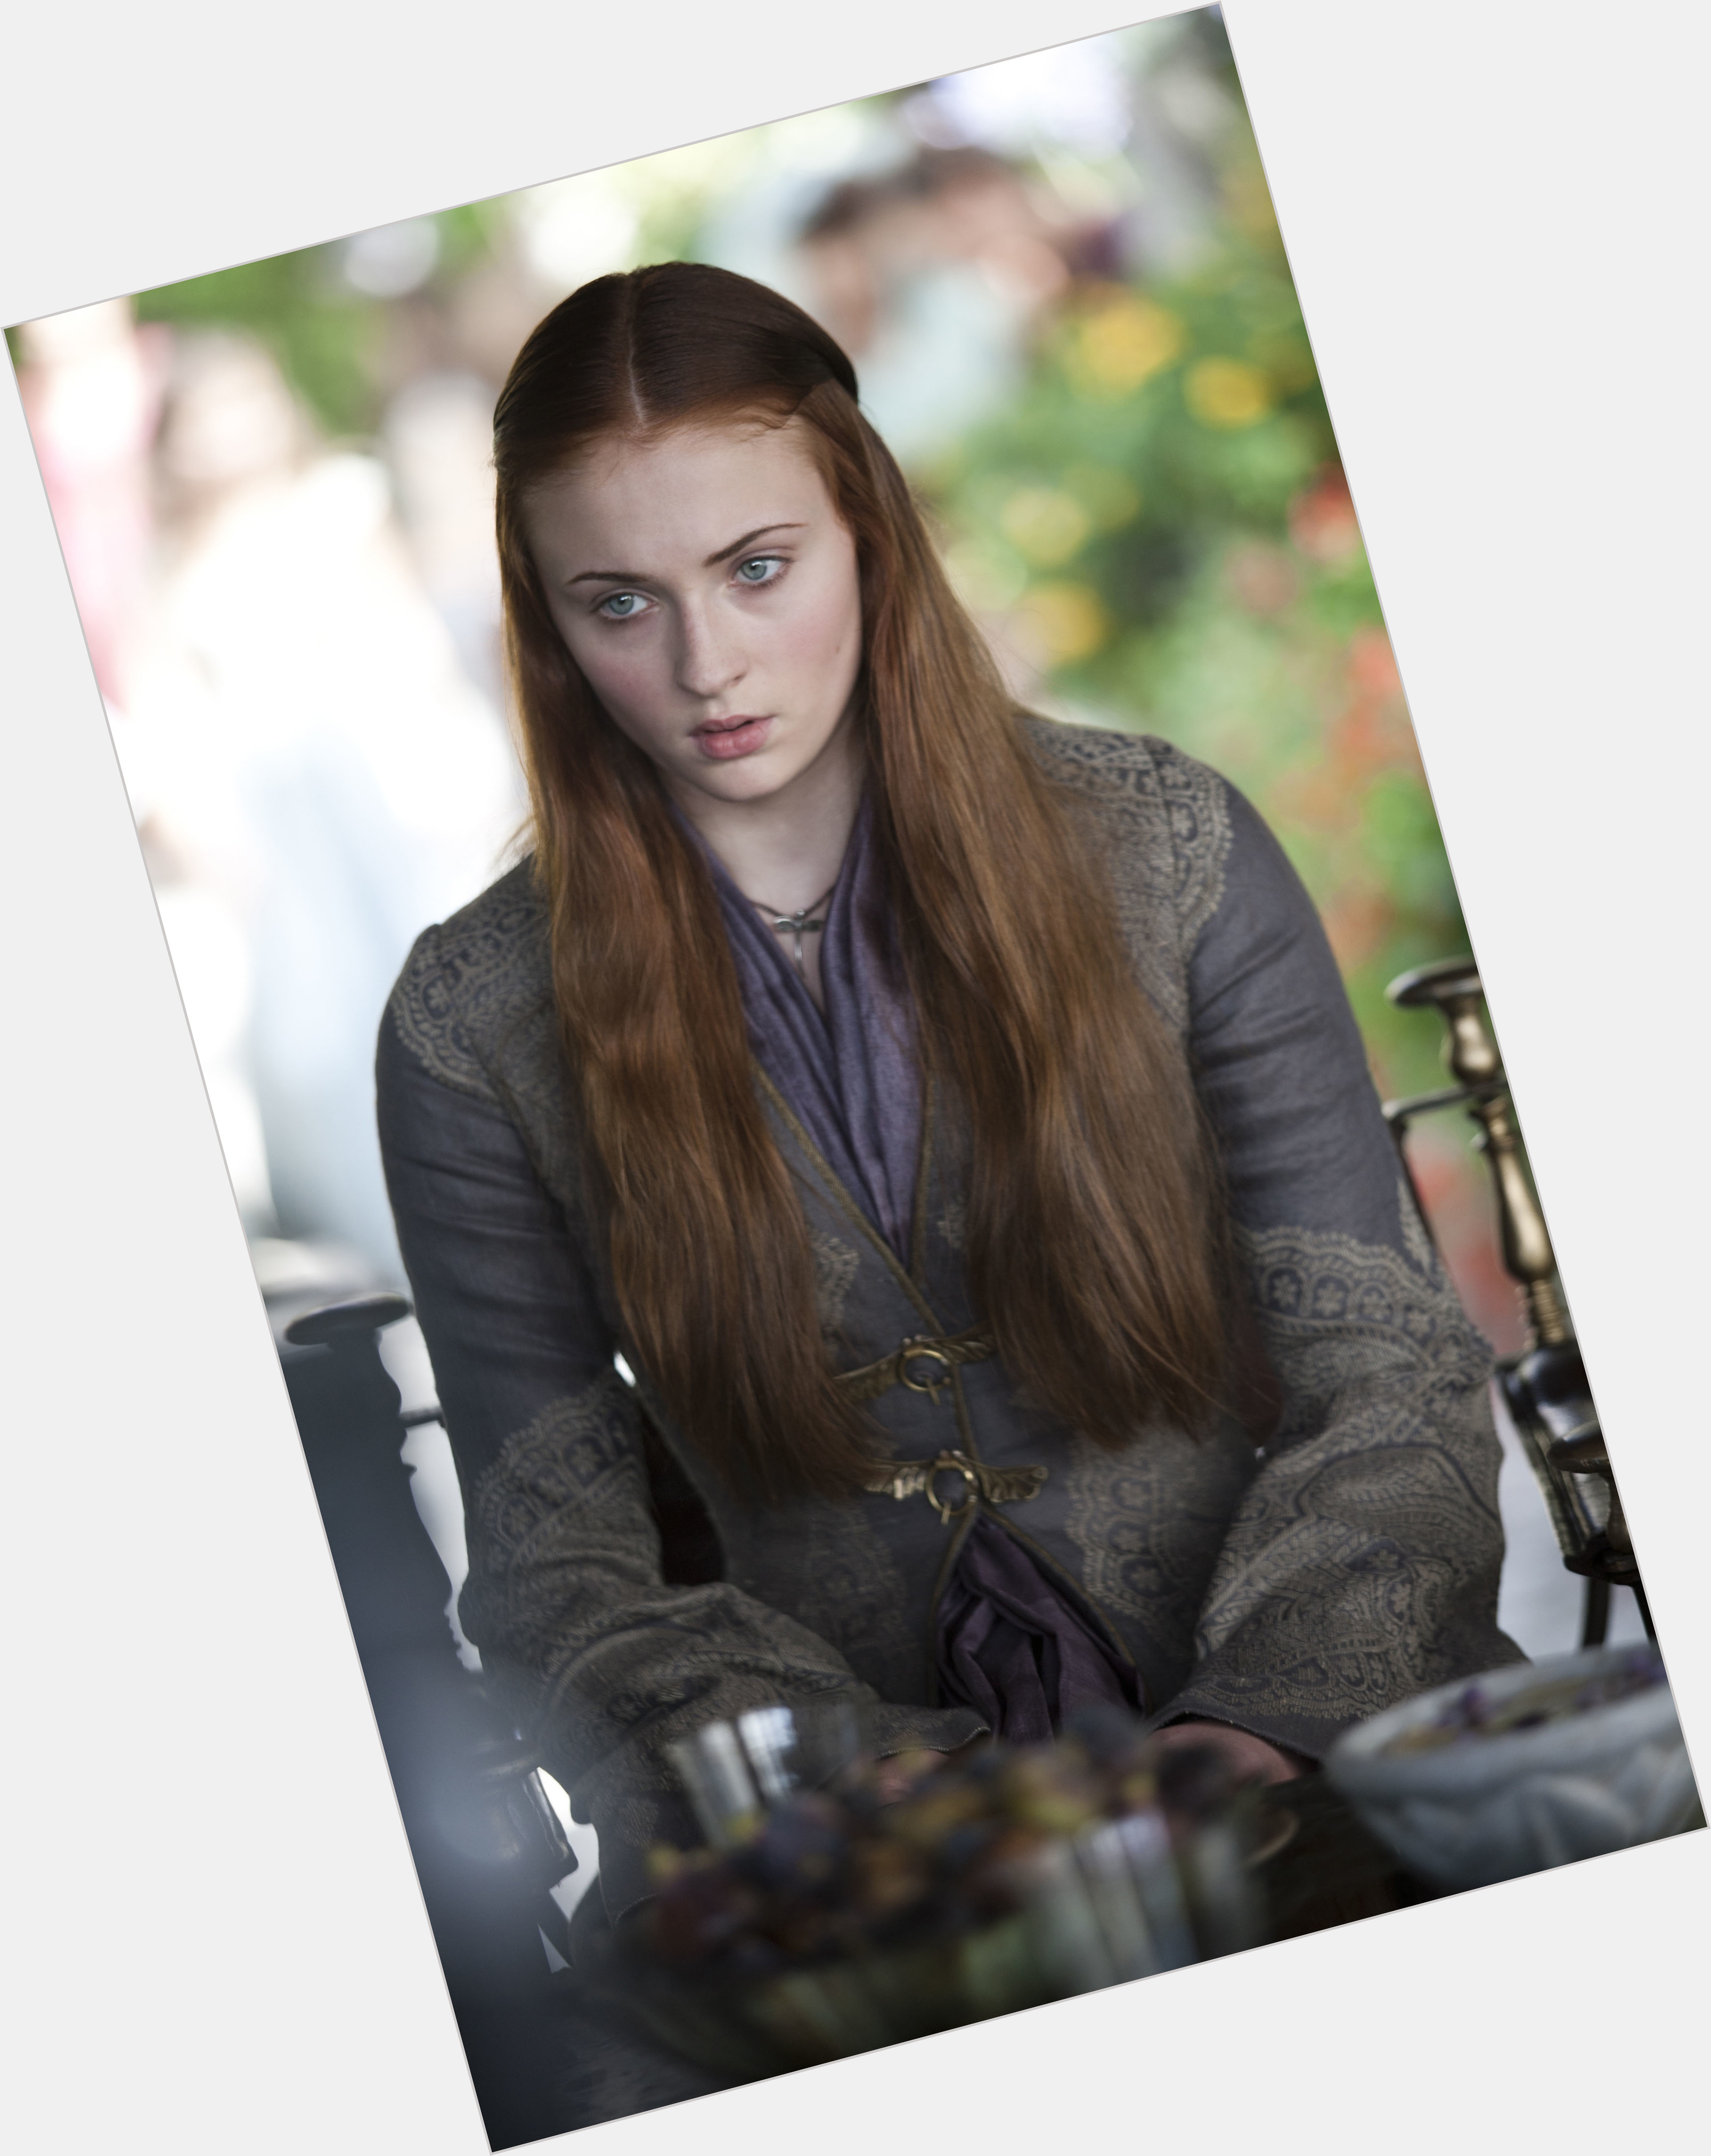 Sansa Stark Slim body,  red hair & hairstyles